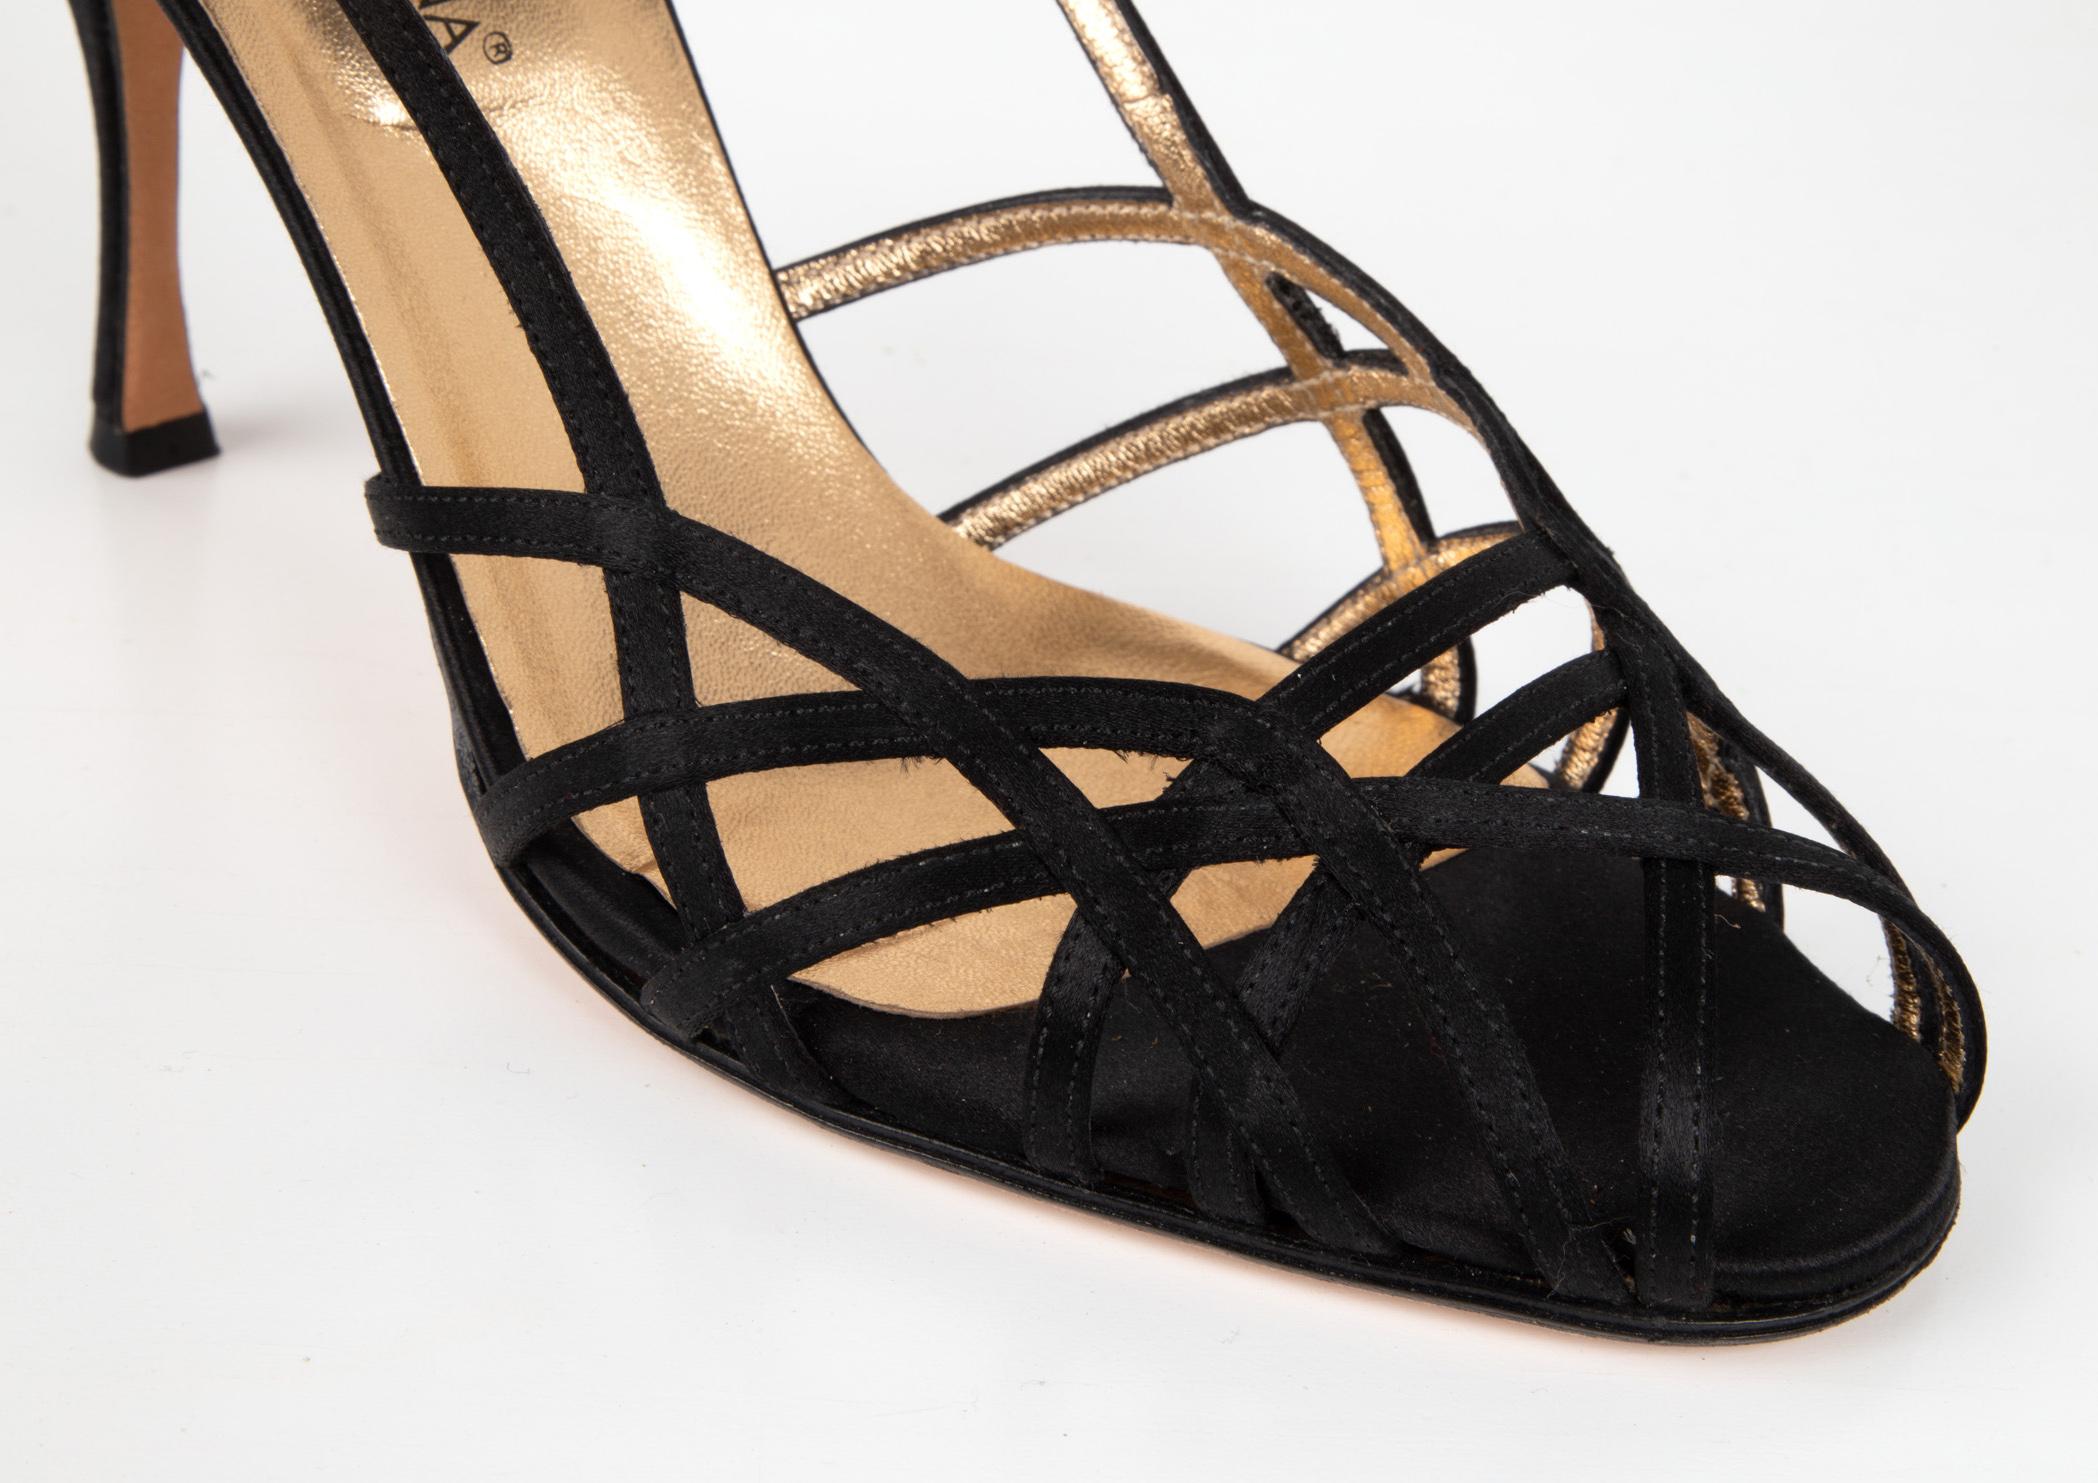 Guaranteed authentic Dolce&Gabbana jet black pretty satin shoe.   
Black satin strappy slingback shoe.
Thin straps create a woven design across the toe.
Shaped heel.  
final sale

SIZE 39.5
USA SIZE 9.5

SHOE MEASURES:
HEEL 4